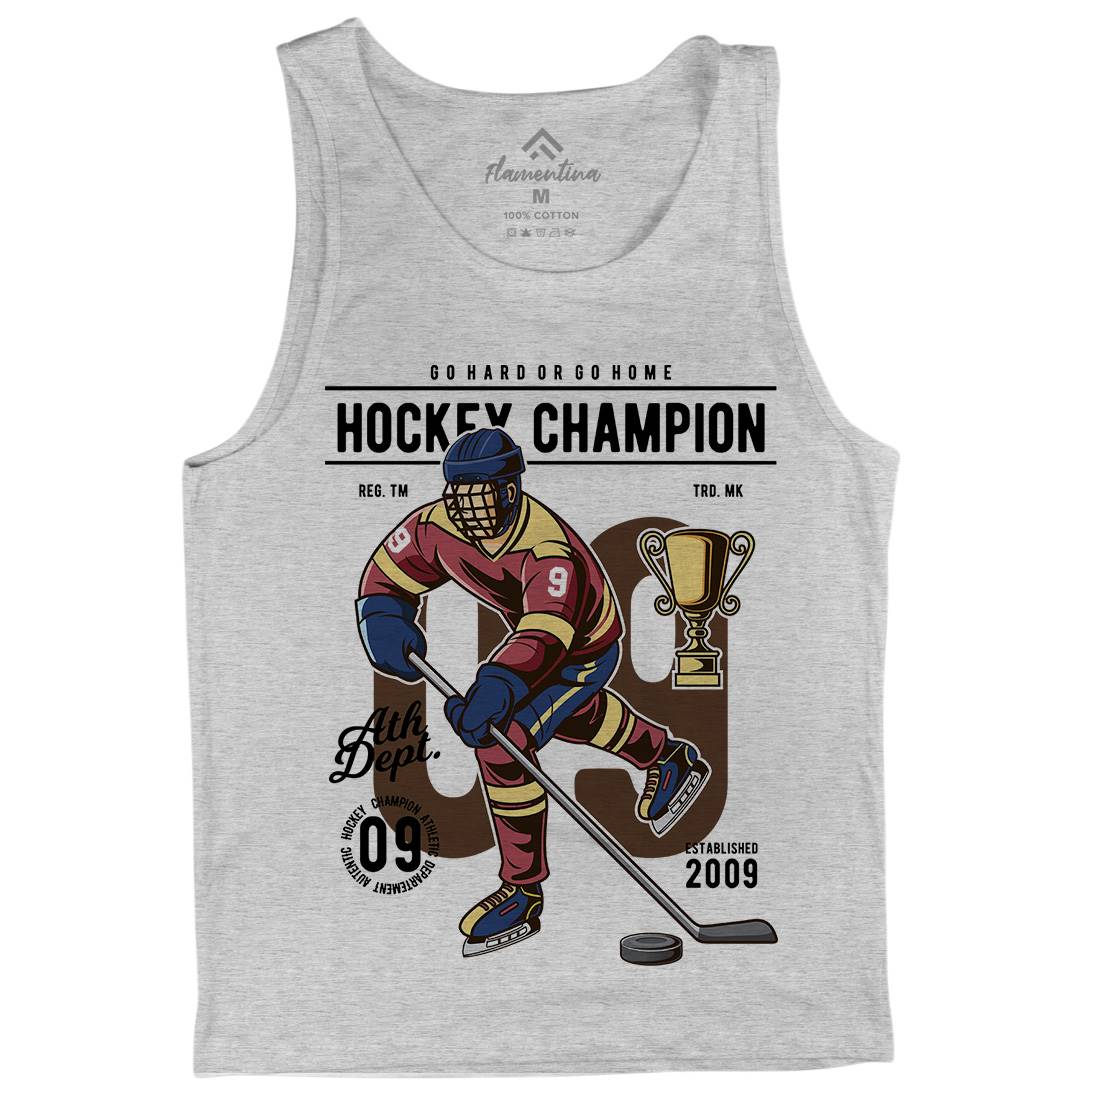 Hockey Champion Mens Tank Top Vest Sport C373